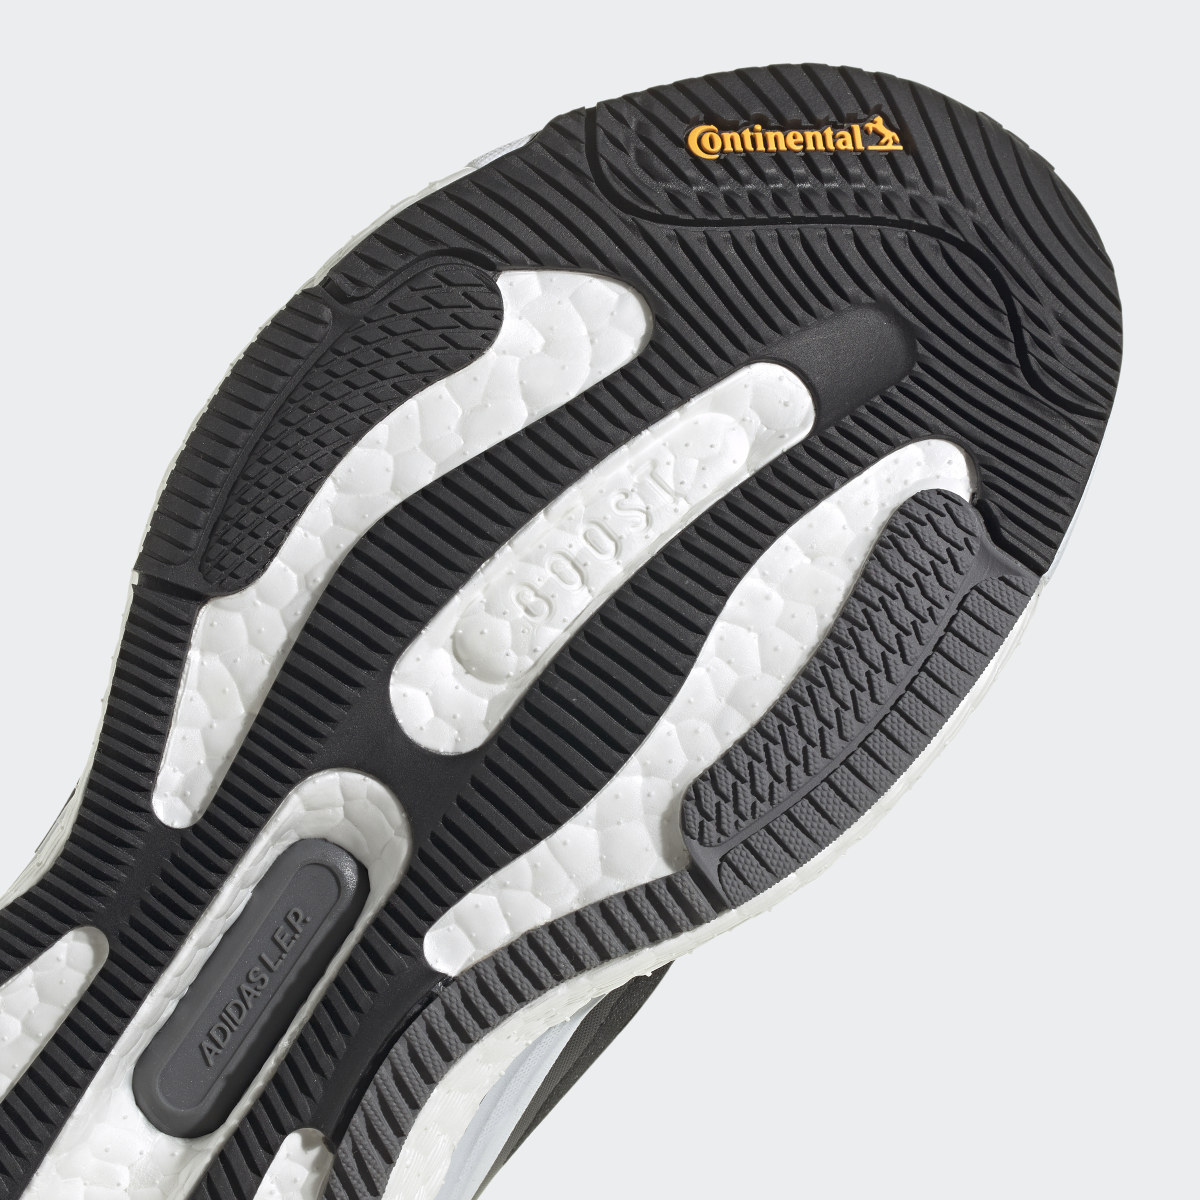 Adidas Solarcontrol Running Shoes. 10